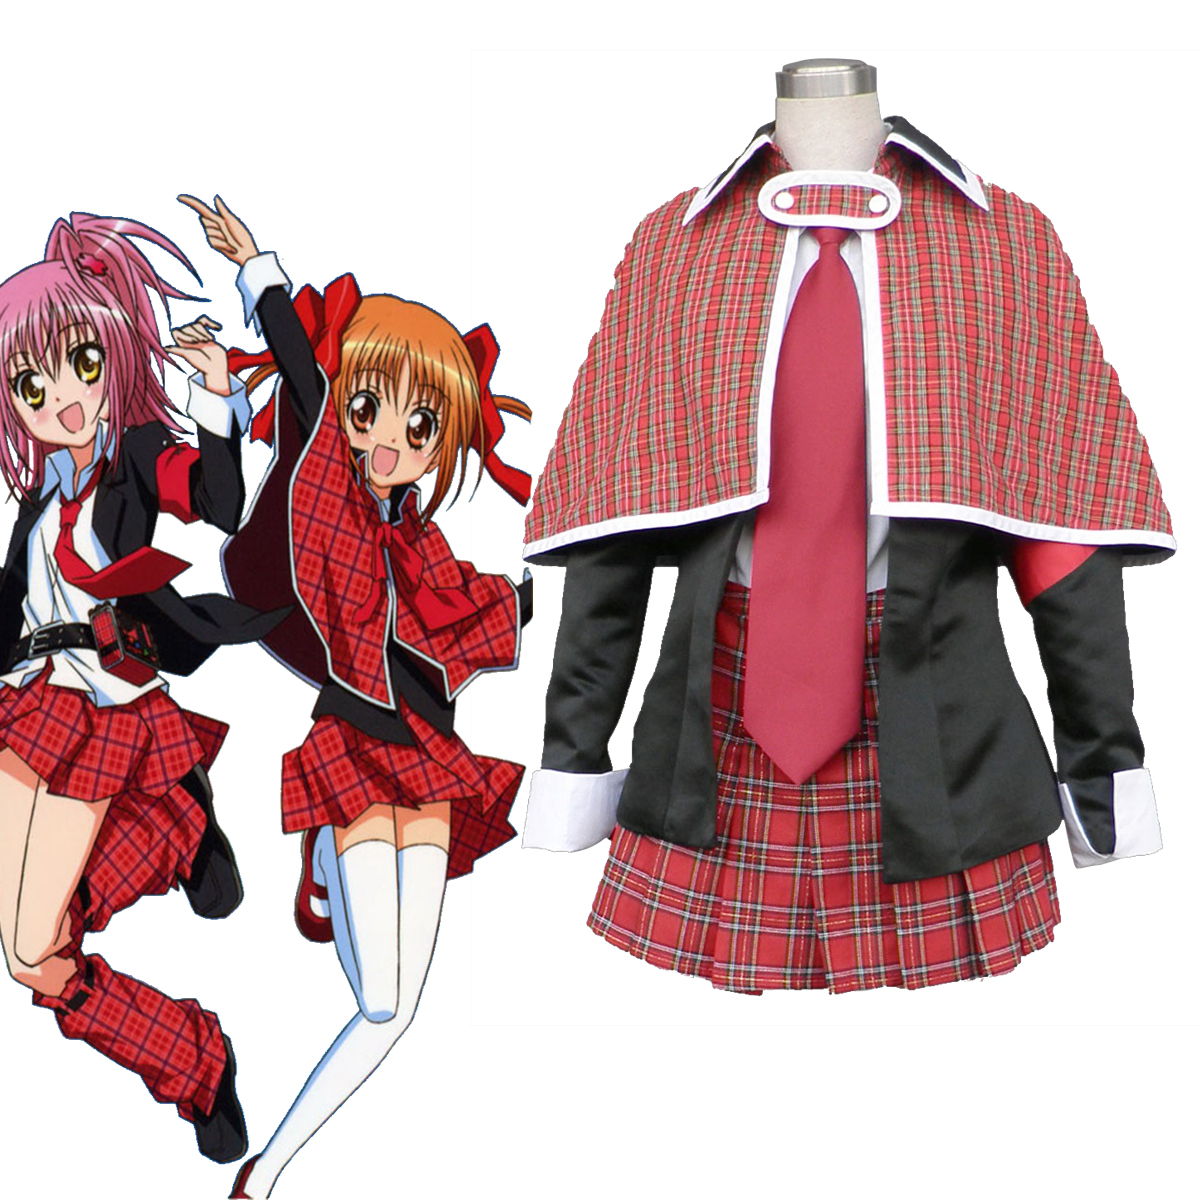 Shugo Chara Female School Uniform 2 Anime Cosplay Costumes Outfit